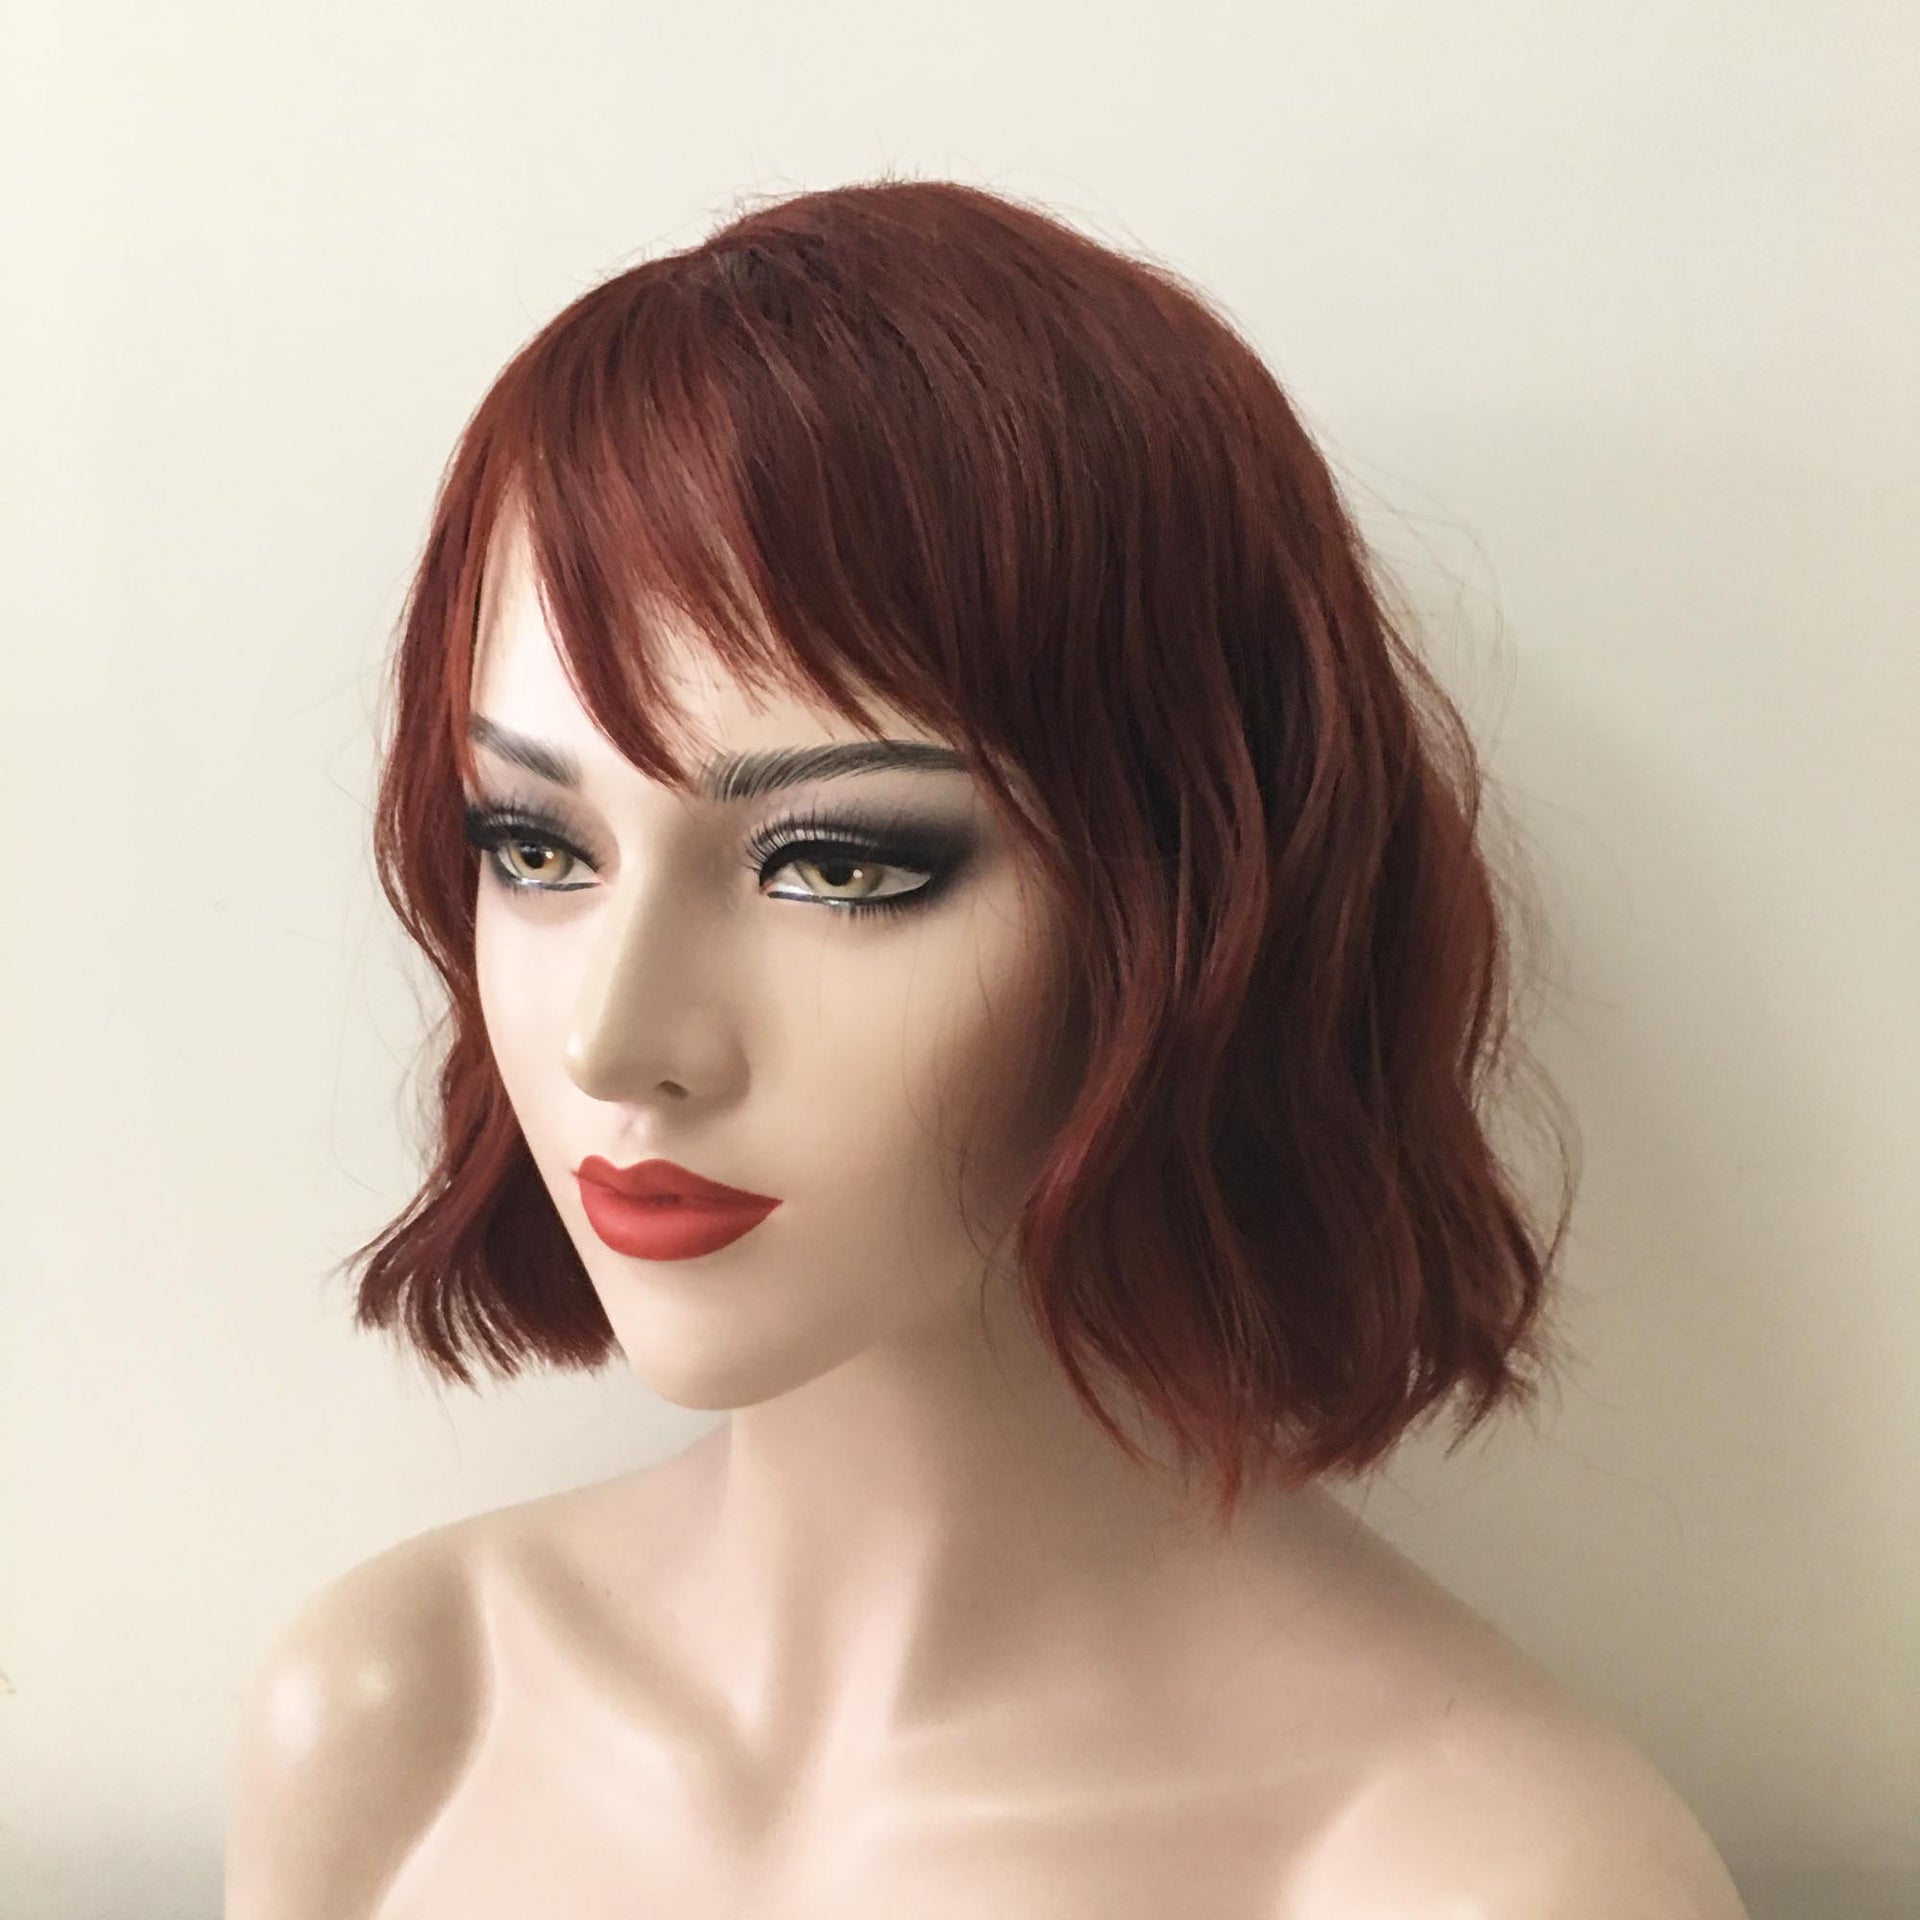 nevermindyrhead Women Auburn Dark Red Short Wavy Bob Fringe Bangs Wig